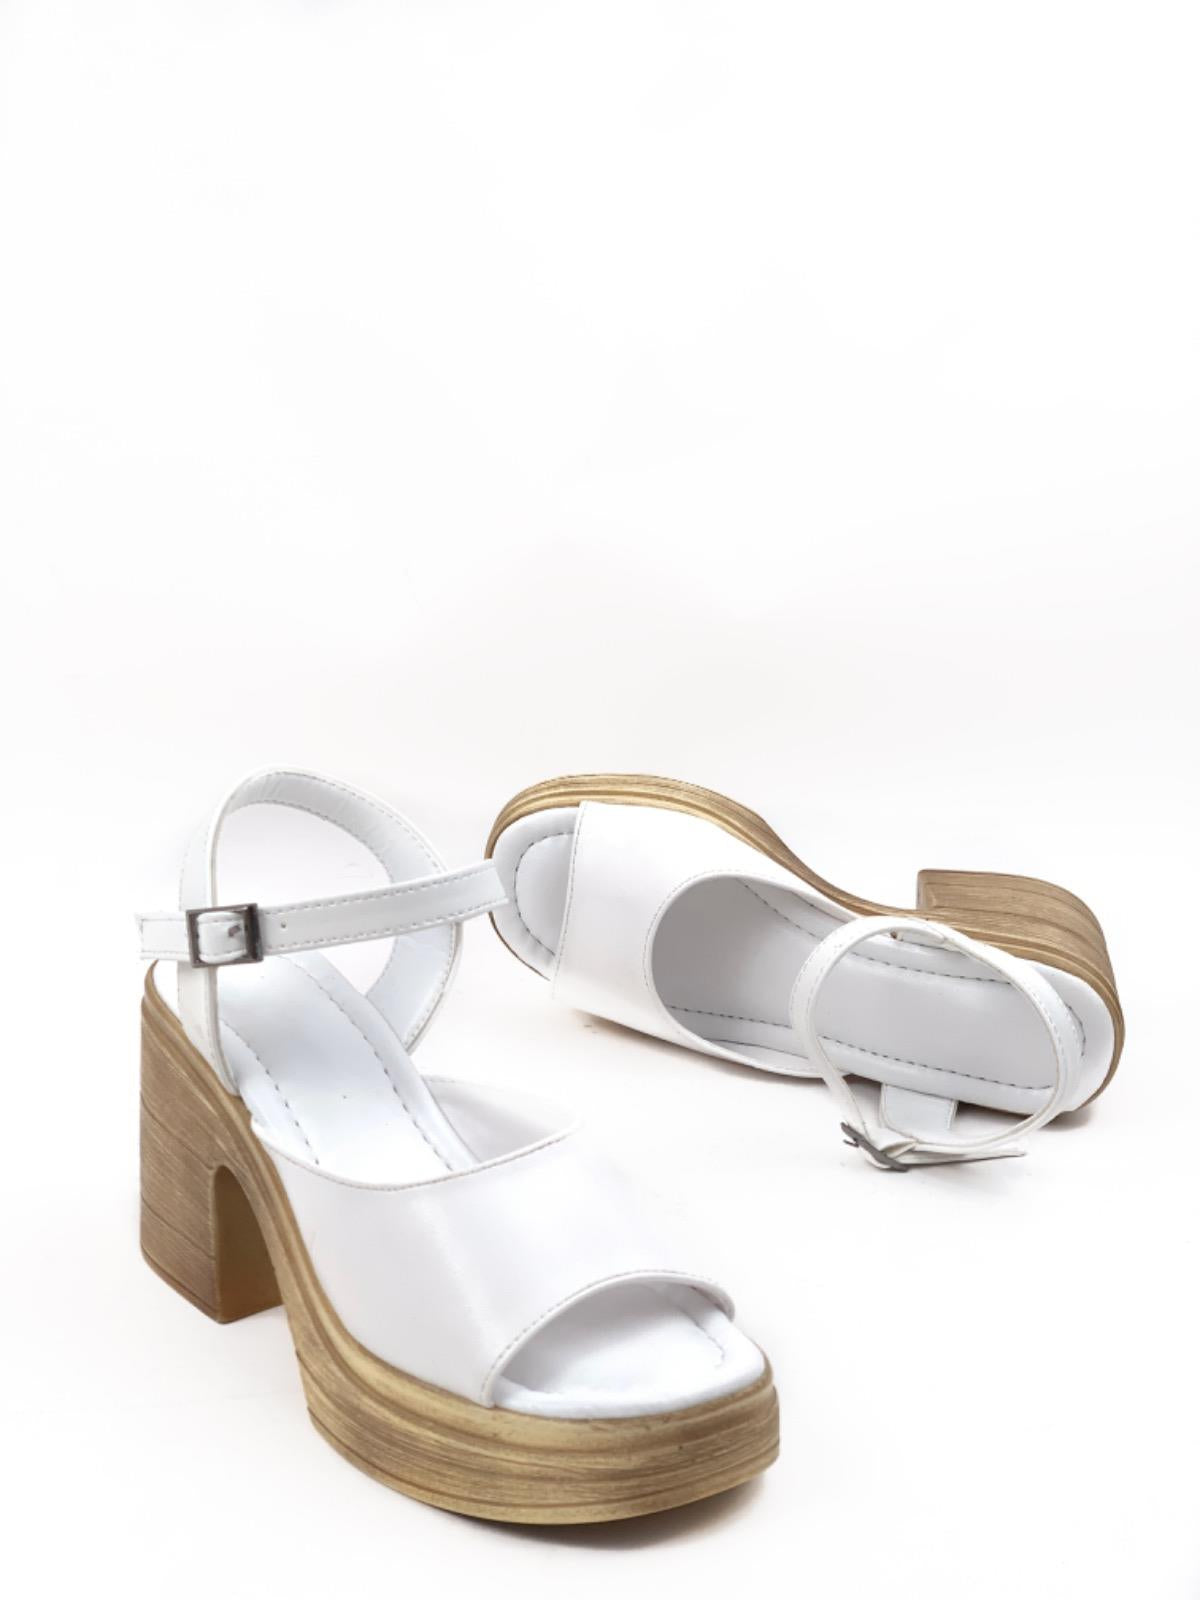 Women's WHITE Single Strap Heeled Orthopedic Sole Sandals - STREETMODE™